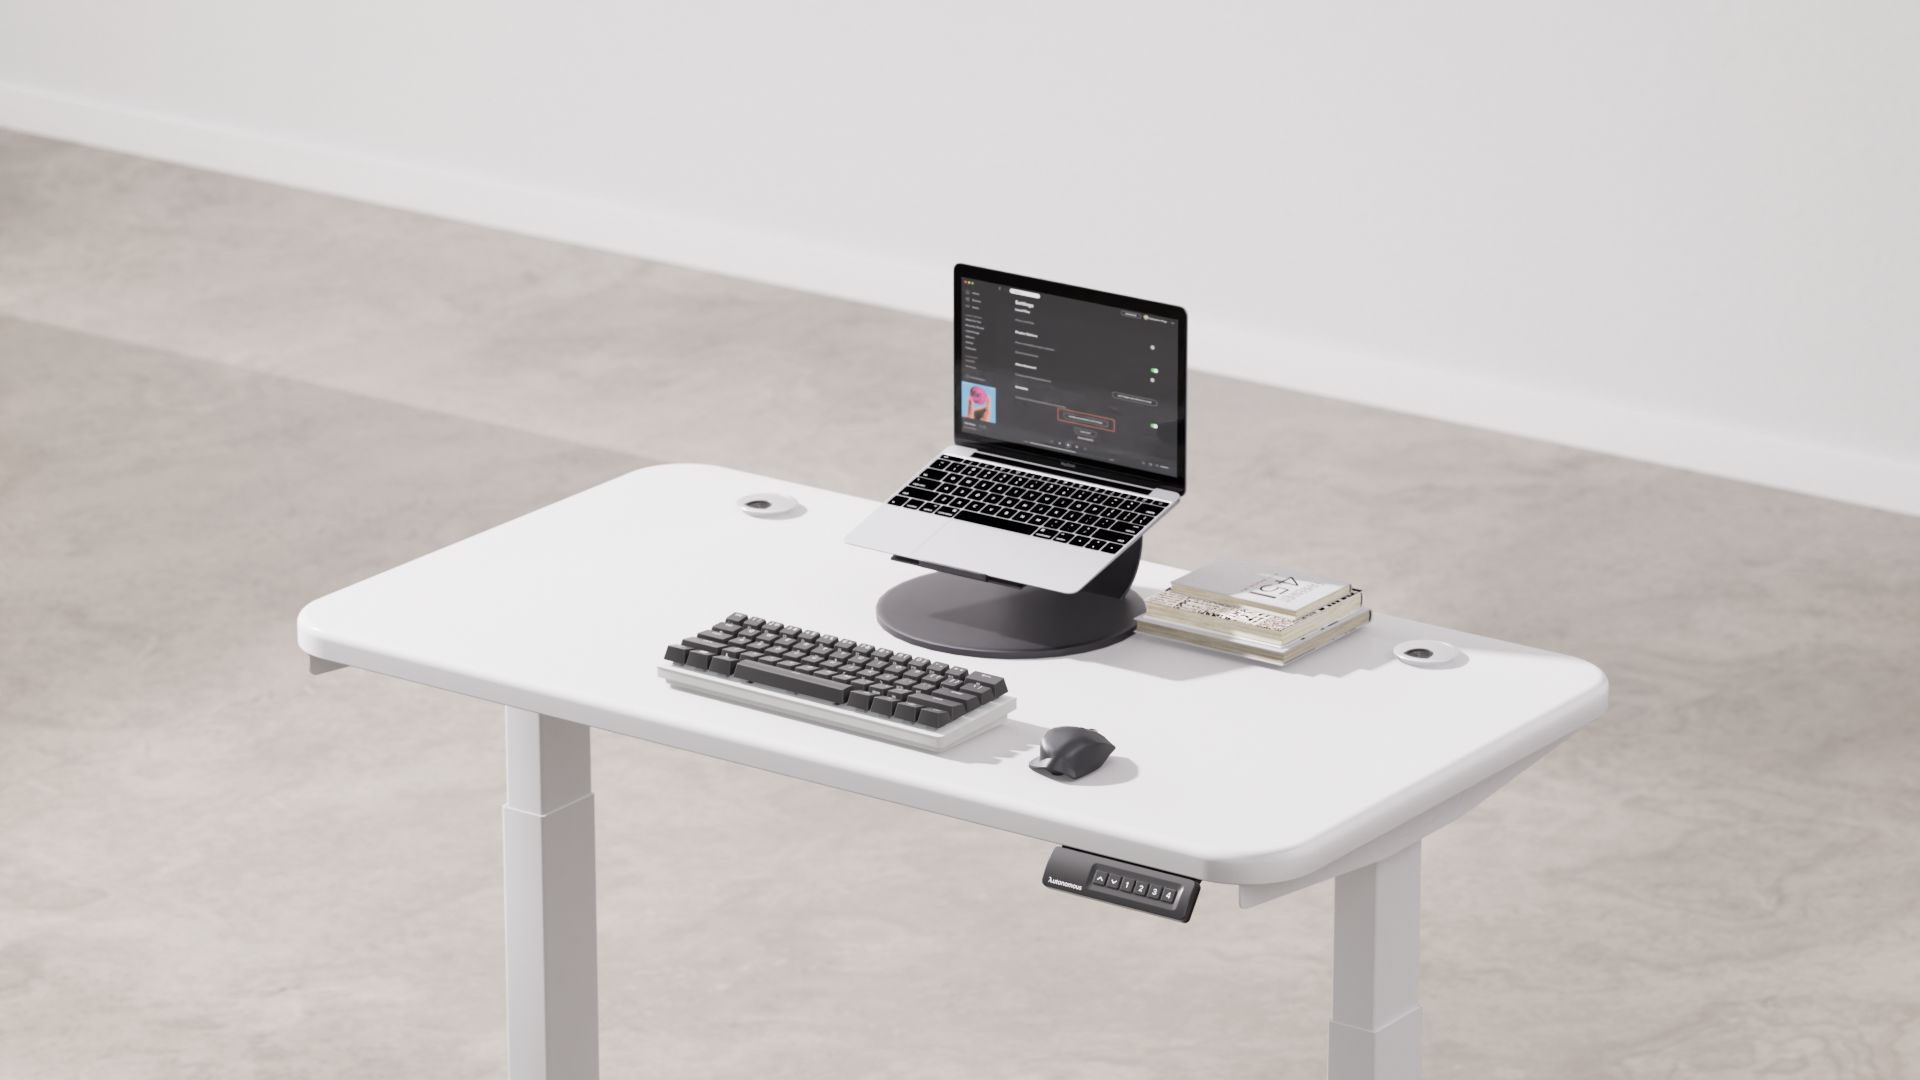 Autonomous Desk Eureka (Standard)